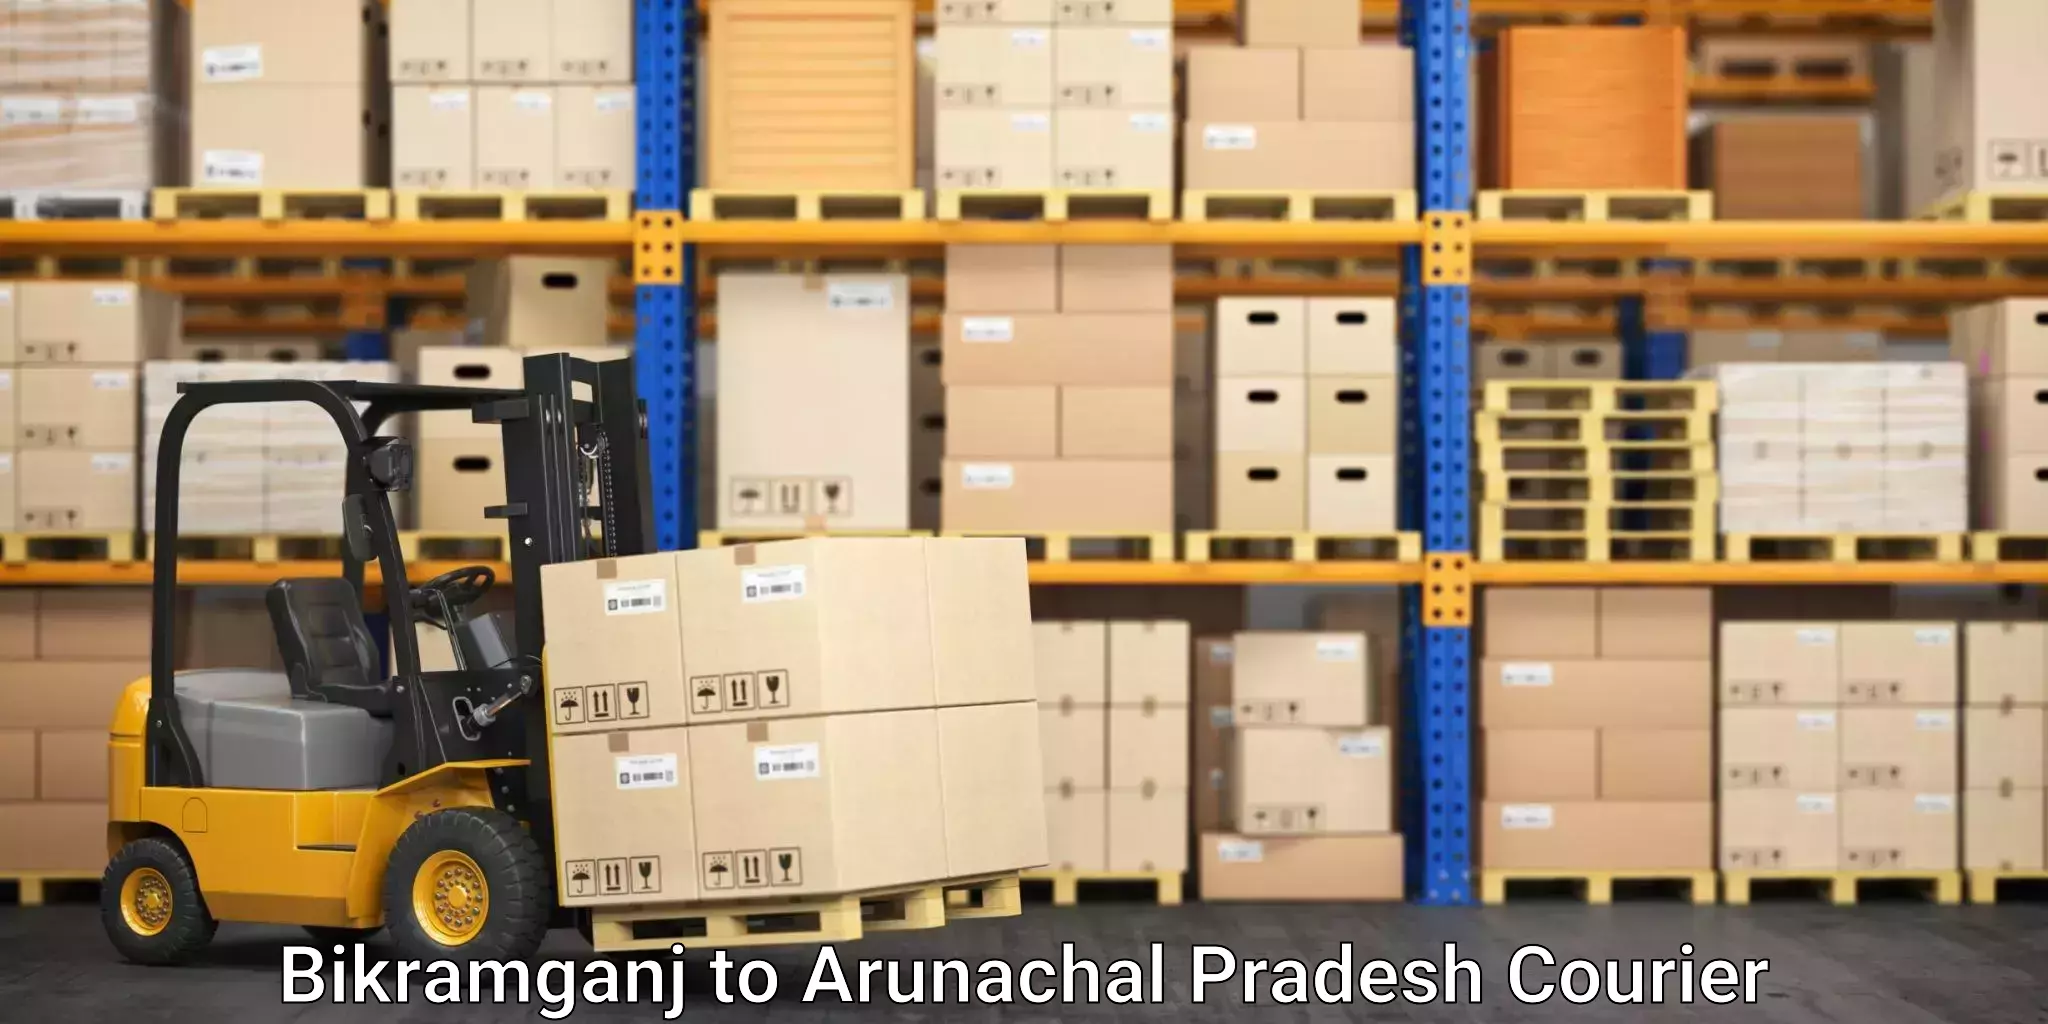 High-quality moving services in Bikramganj to Arunachal Pradesh